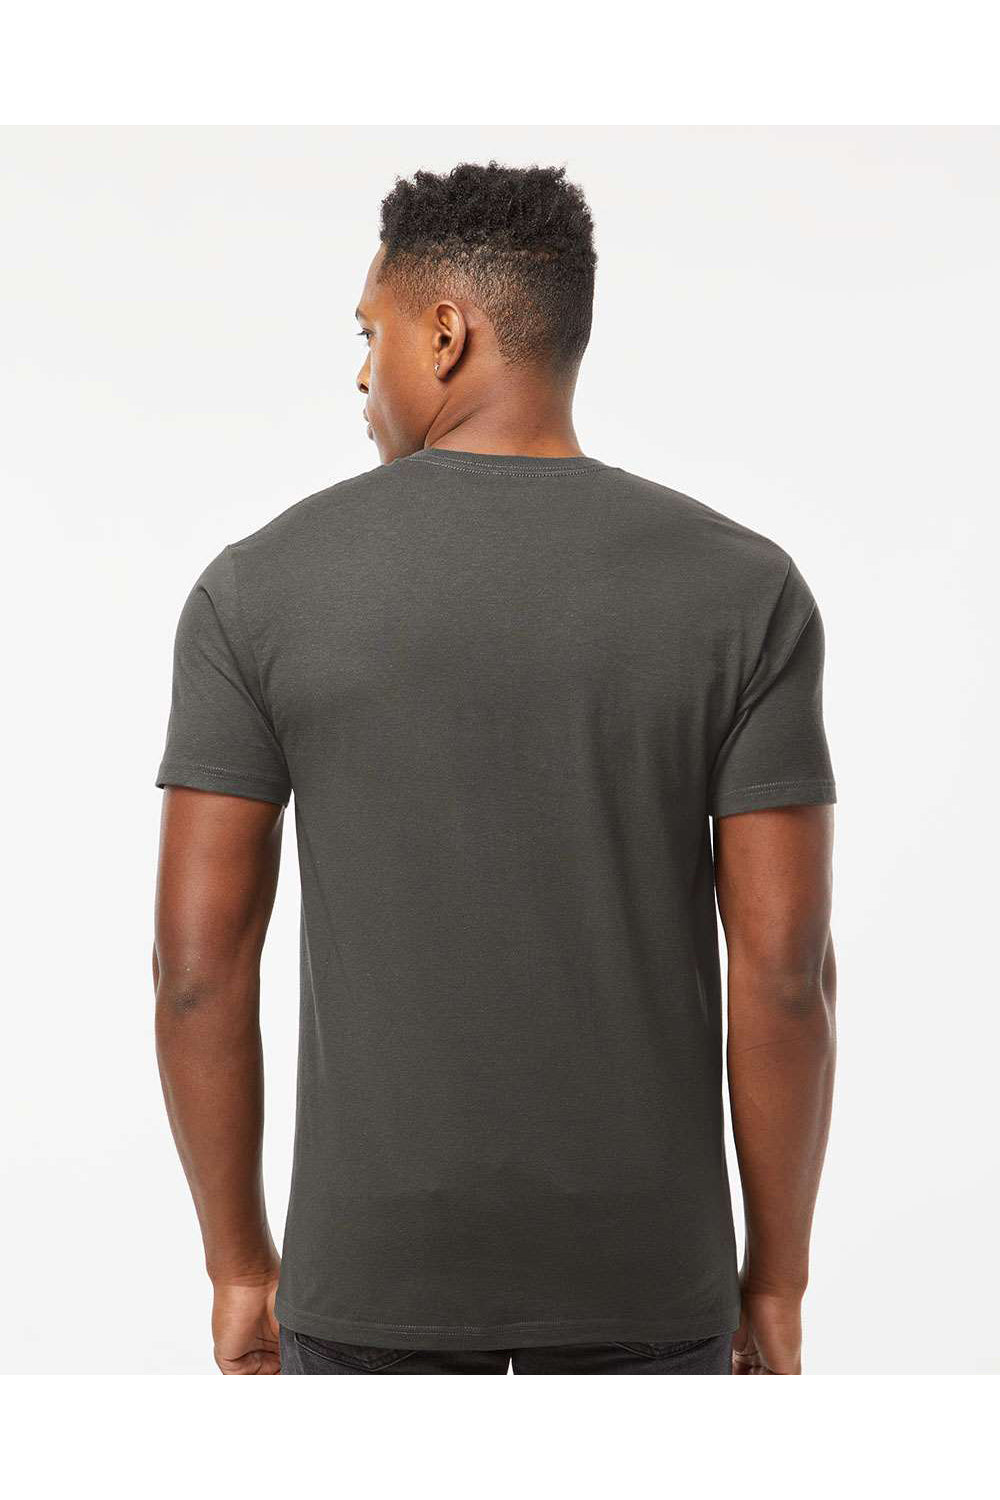 Tultex 290 Mens Jersey Short Sleeve Crewneck T-Shirt Charcoal Grey Model Back